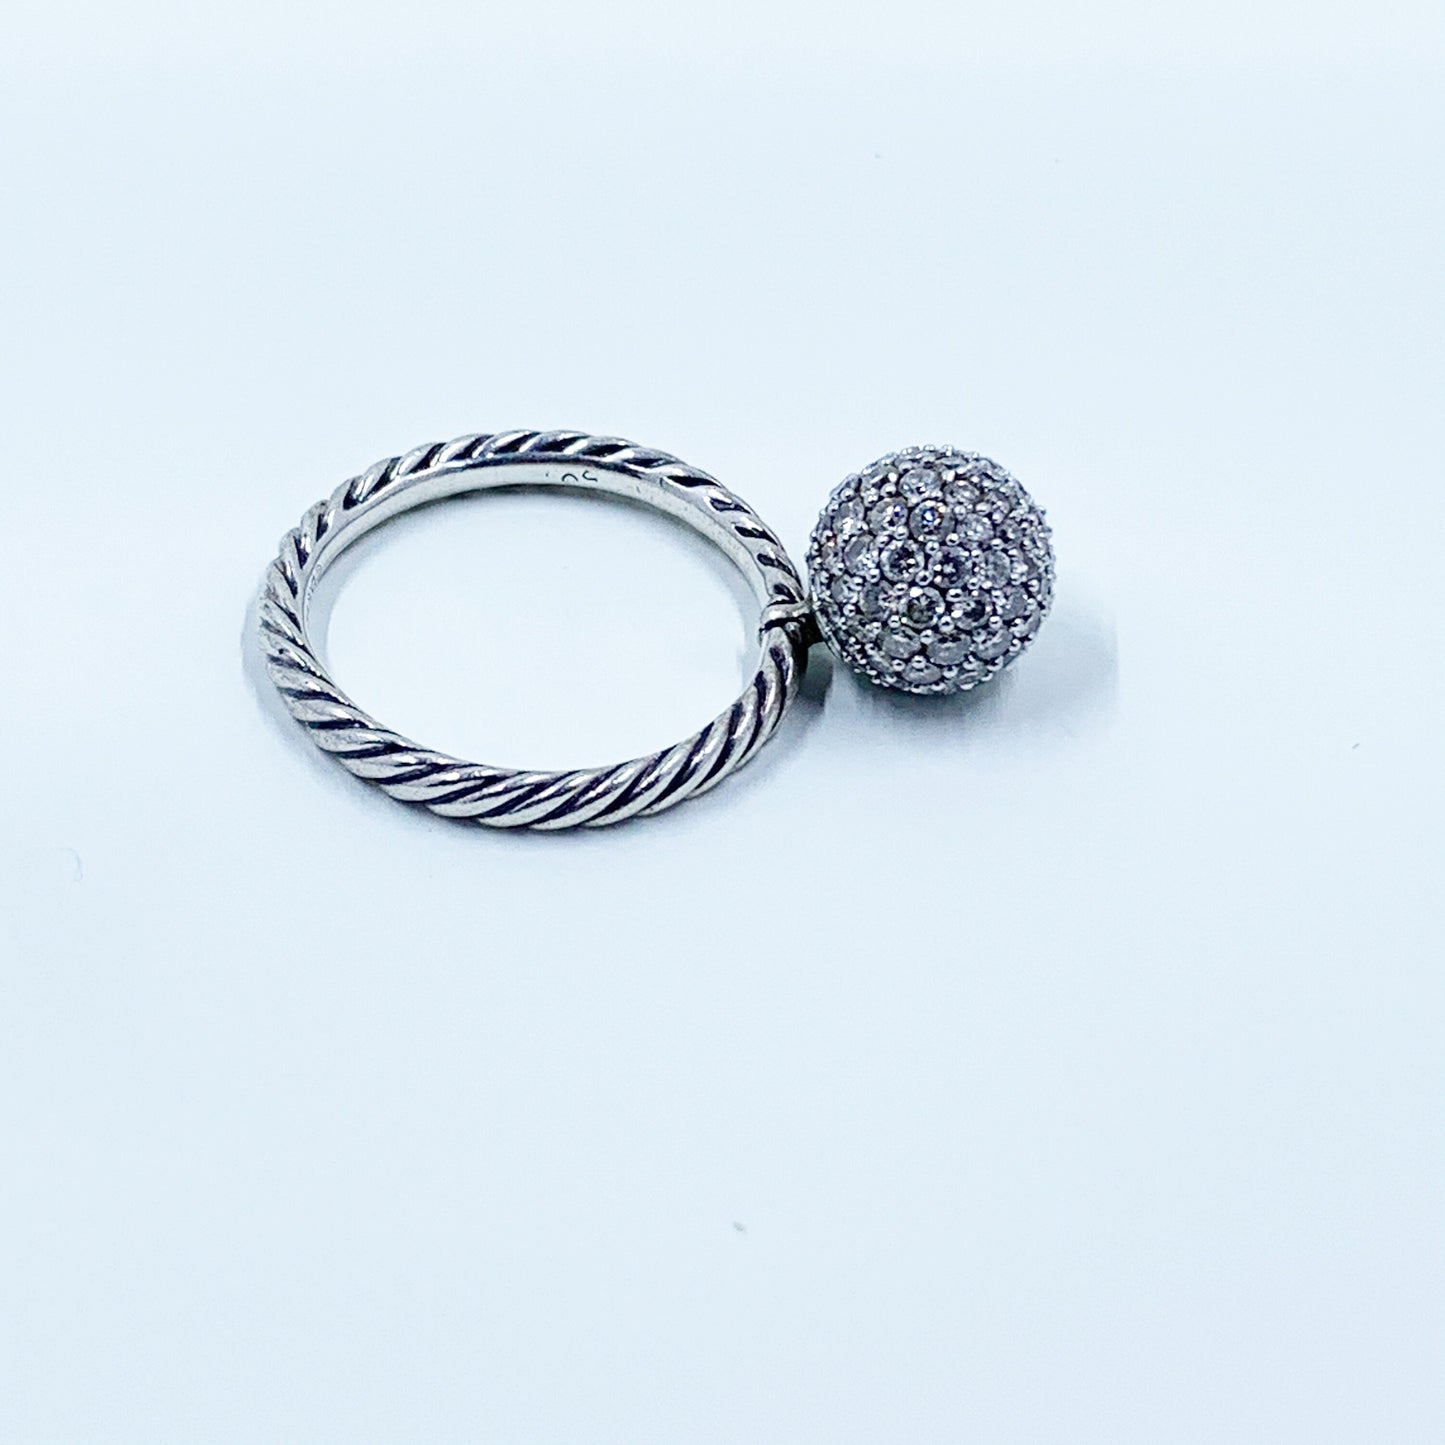 David Yurman Pave Ball Ring | DY Diamond Swivel Elements Ring | 10 mm Pave Ball | Size 8 Ring